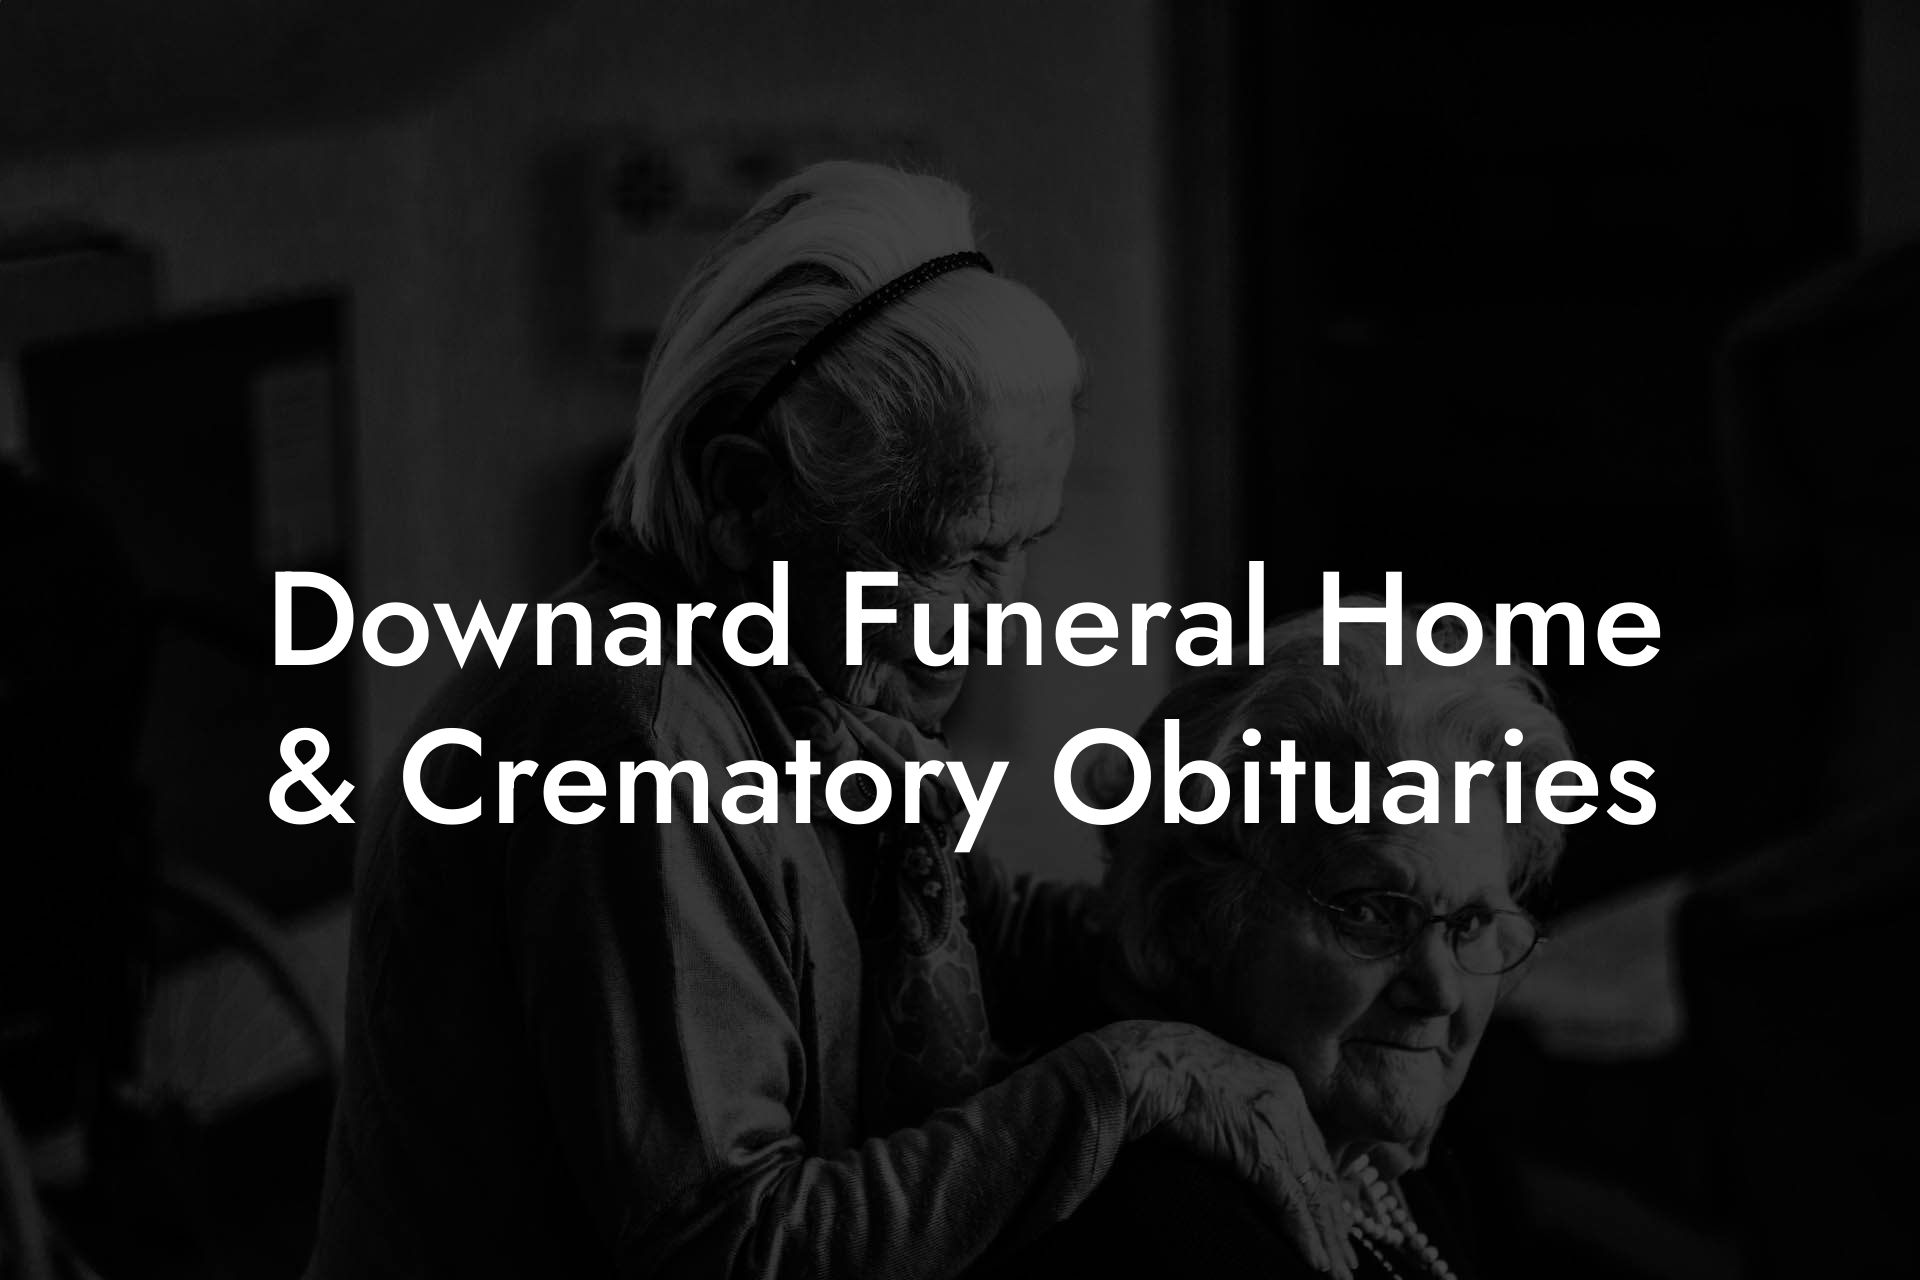 Downard Funeral Home & Crematory Obituaries